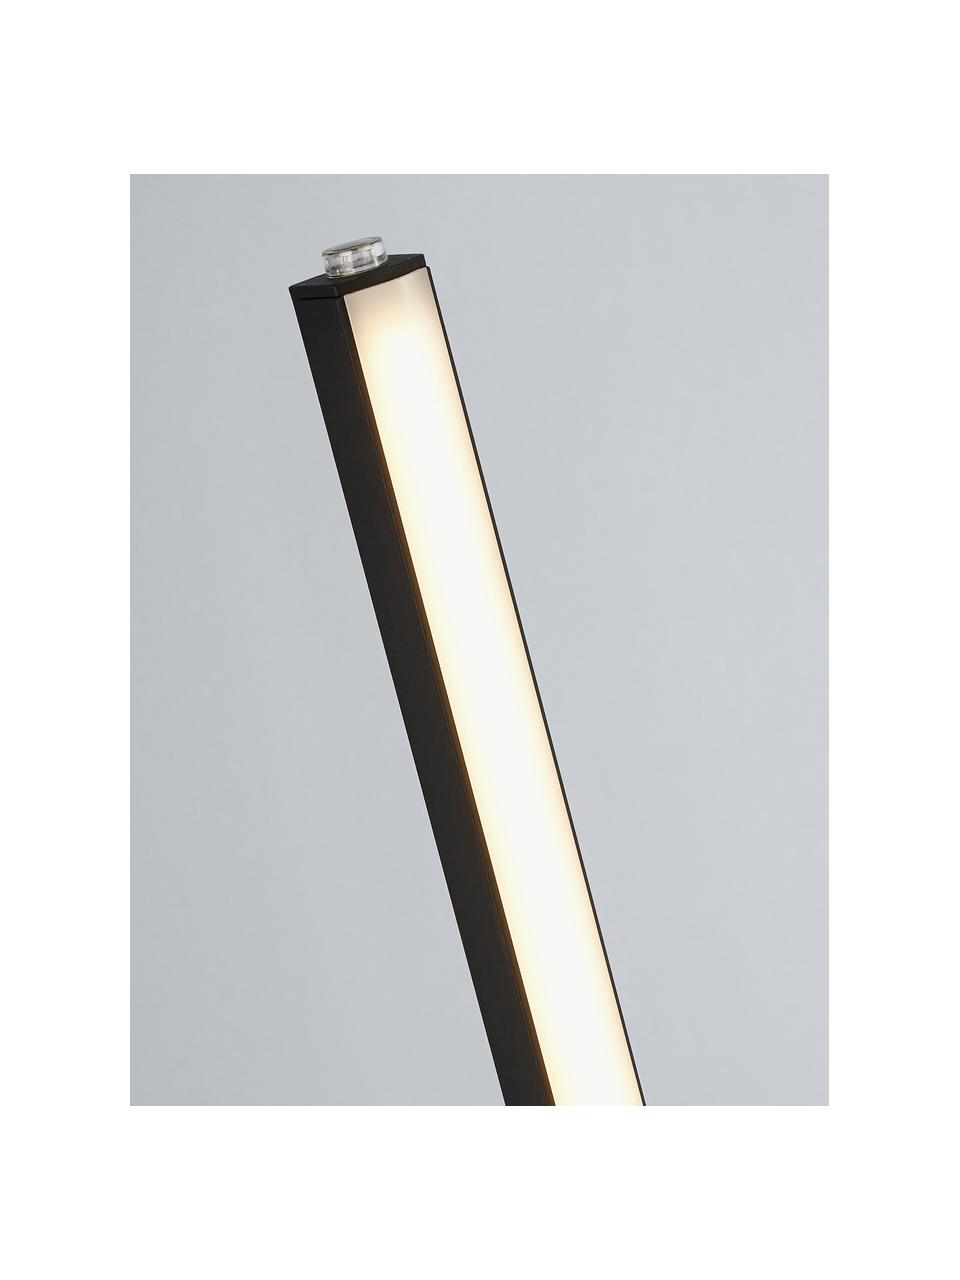 LED-Stehlampe Tribeca mit Farbwechsel-Funktion, Lampenschirm: Stahl, Aluminium, Lampenfuß: Stahl, Aluminium, Schwarz, H 150 cm